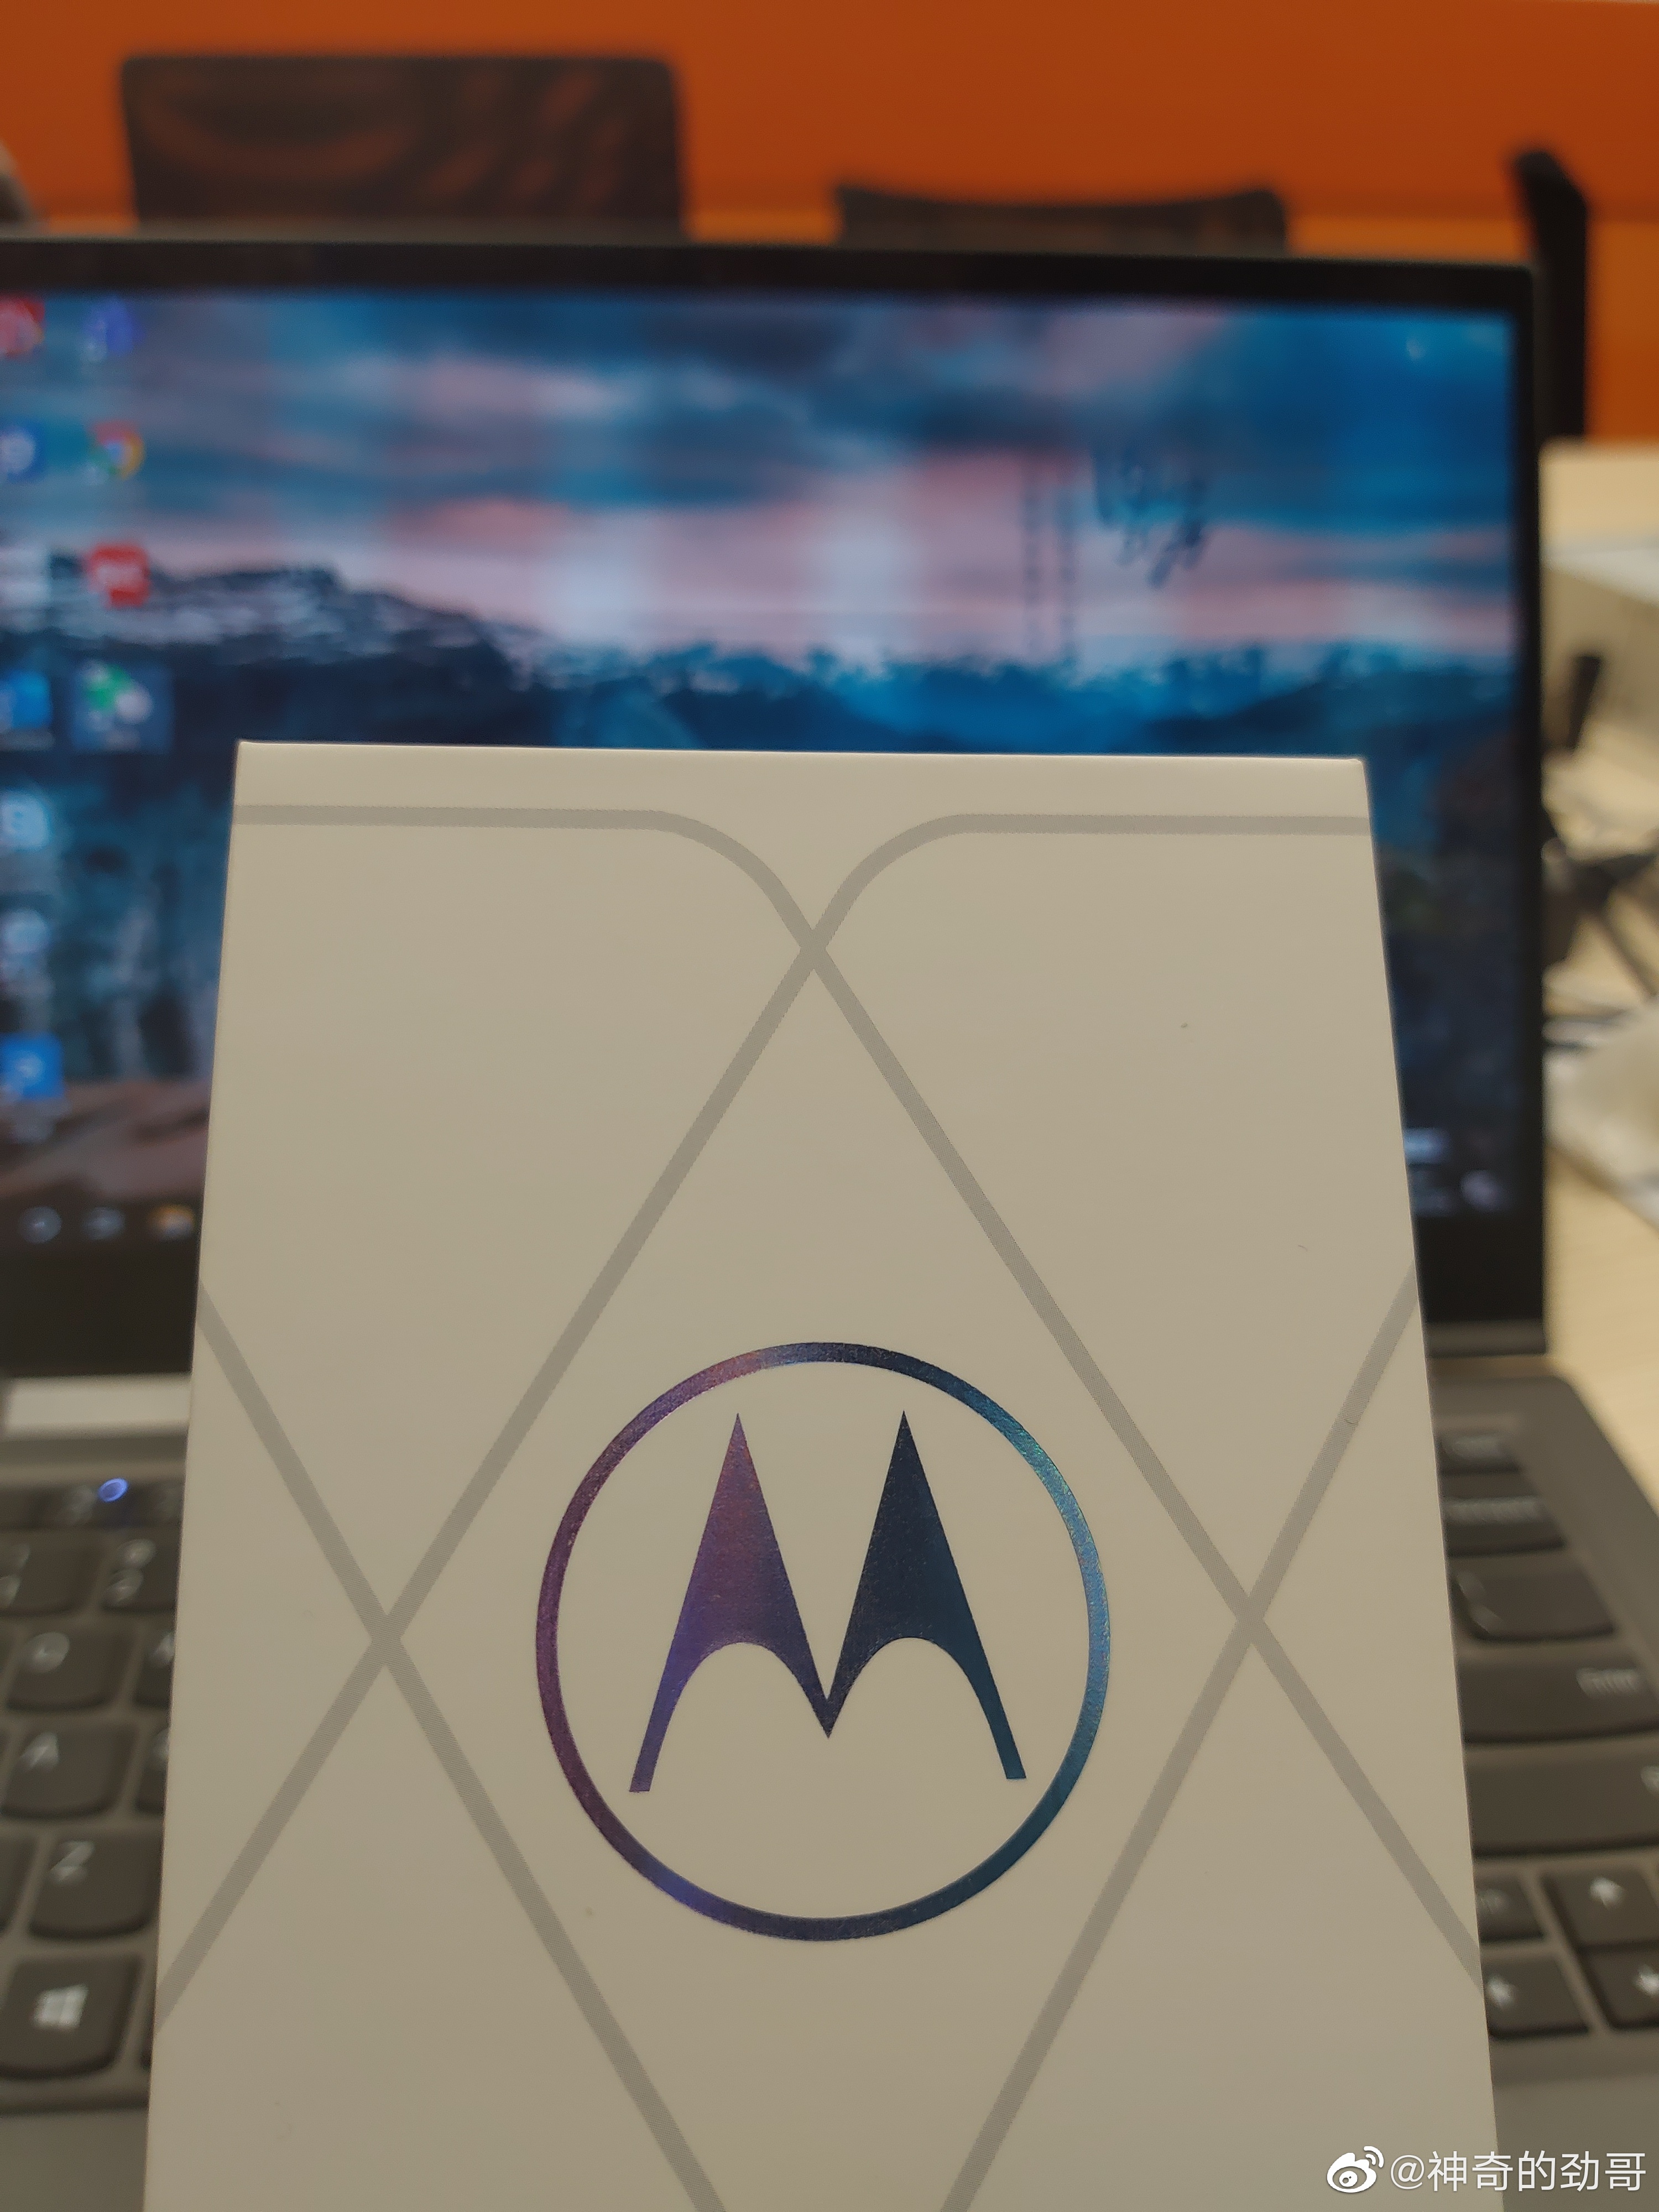 Upcoming Motorola phone teased